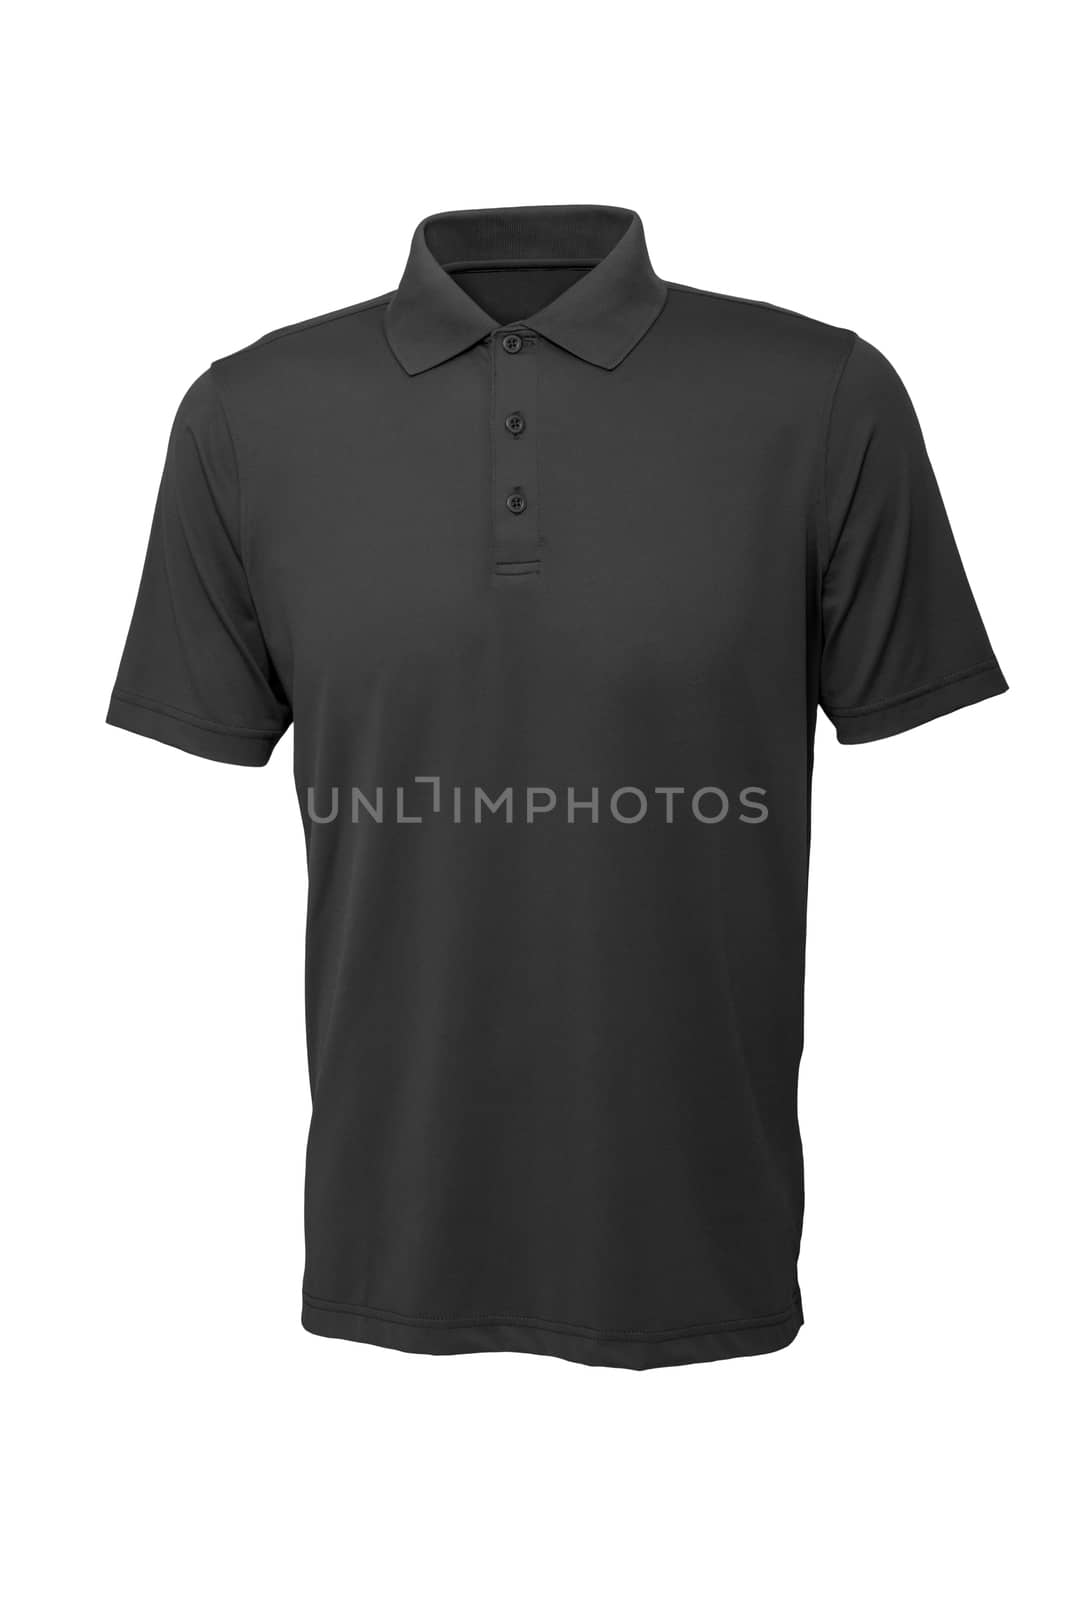 Golf grey tee shirt for man or woman by praethip